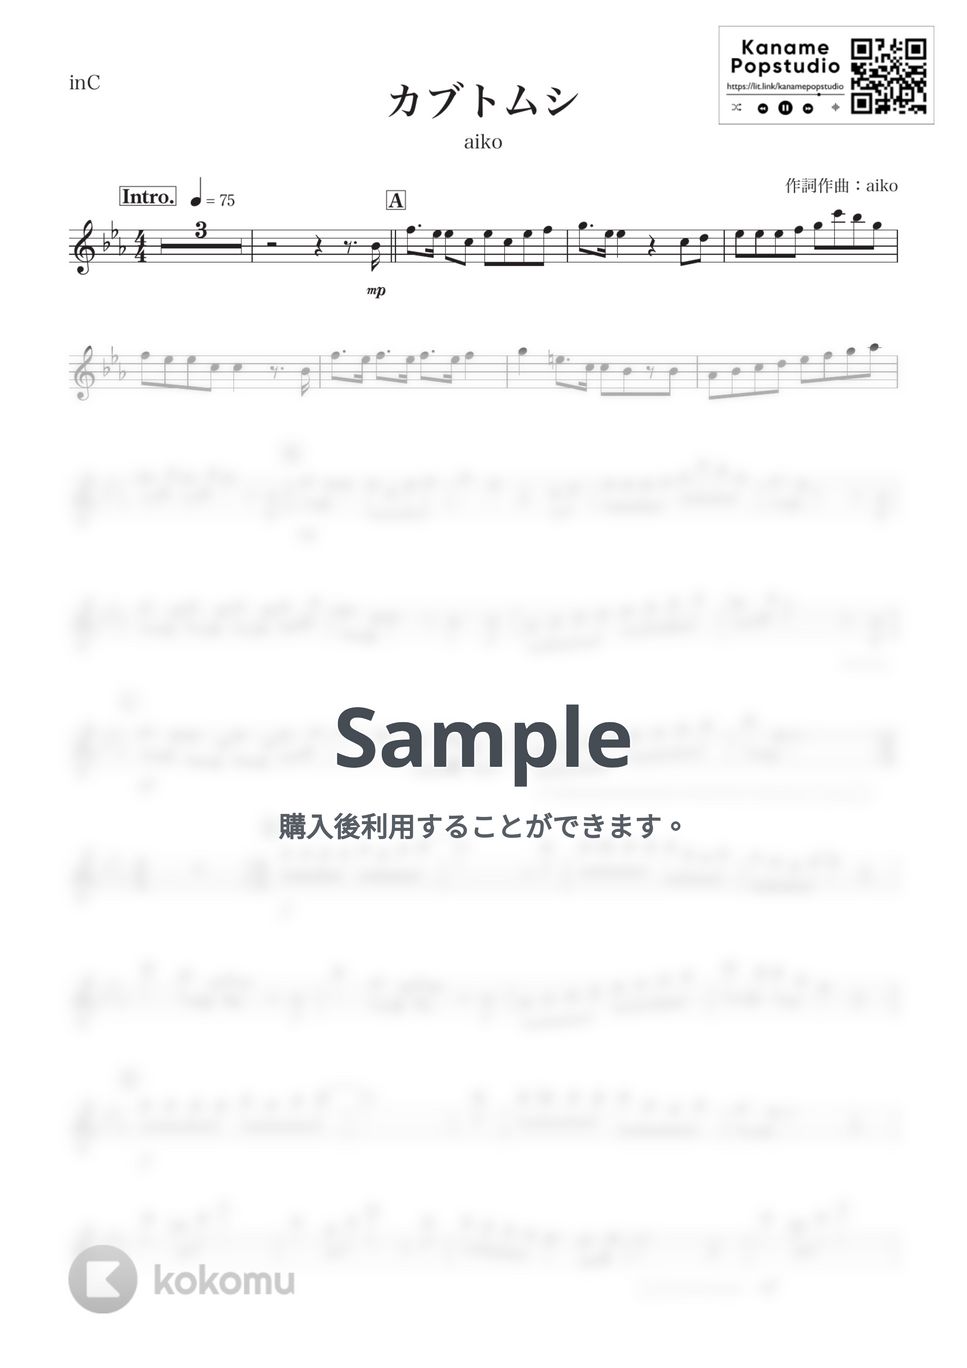 aiko - カブトムシ (C) by kanamusic